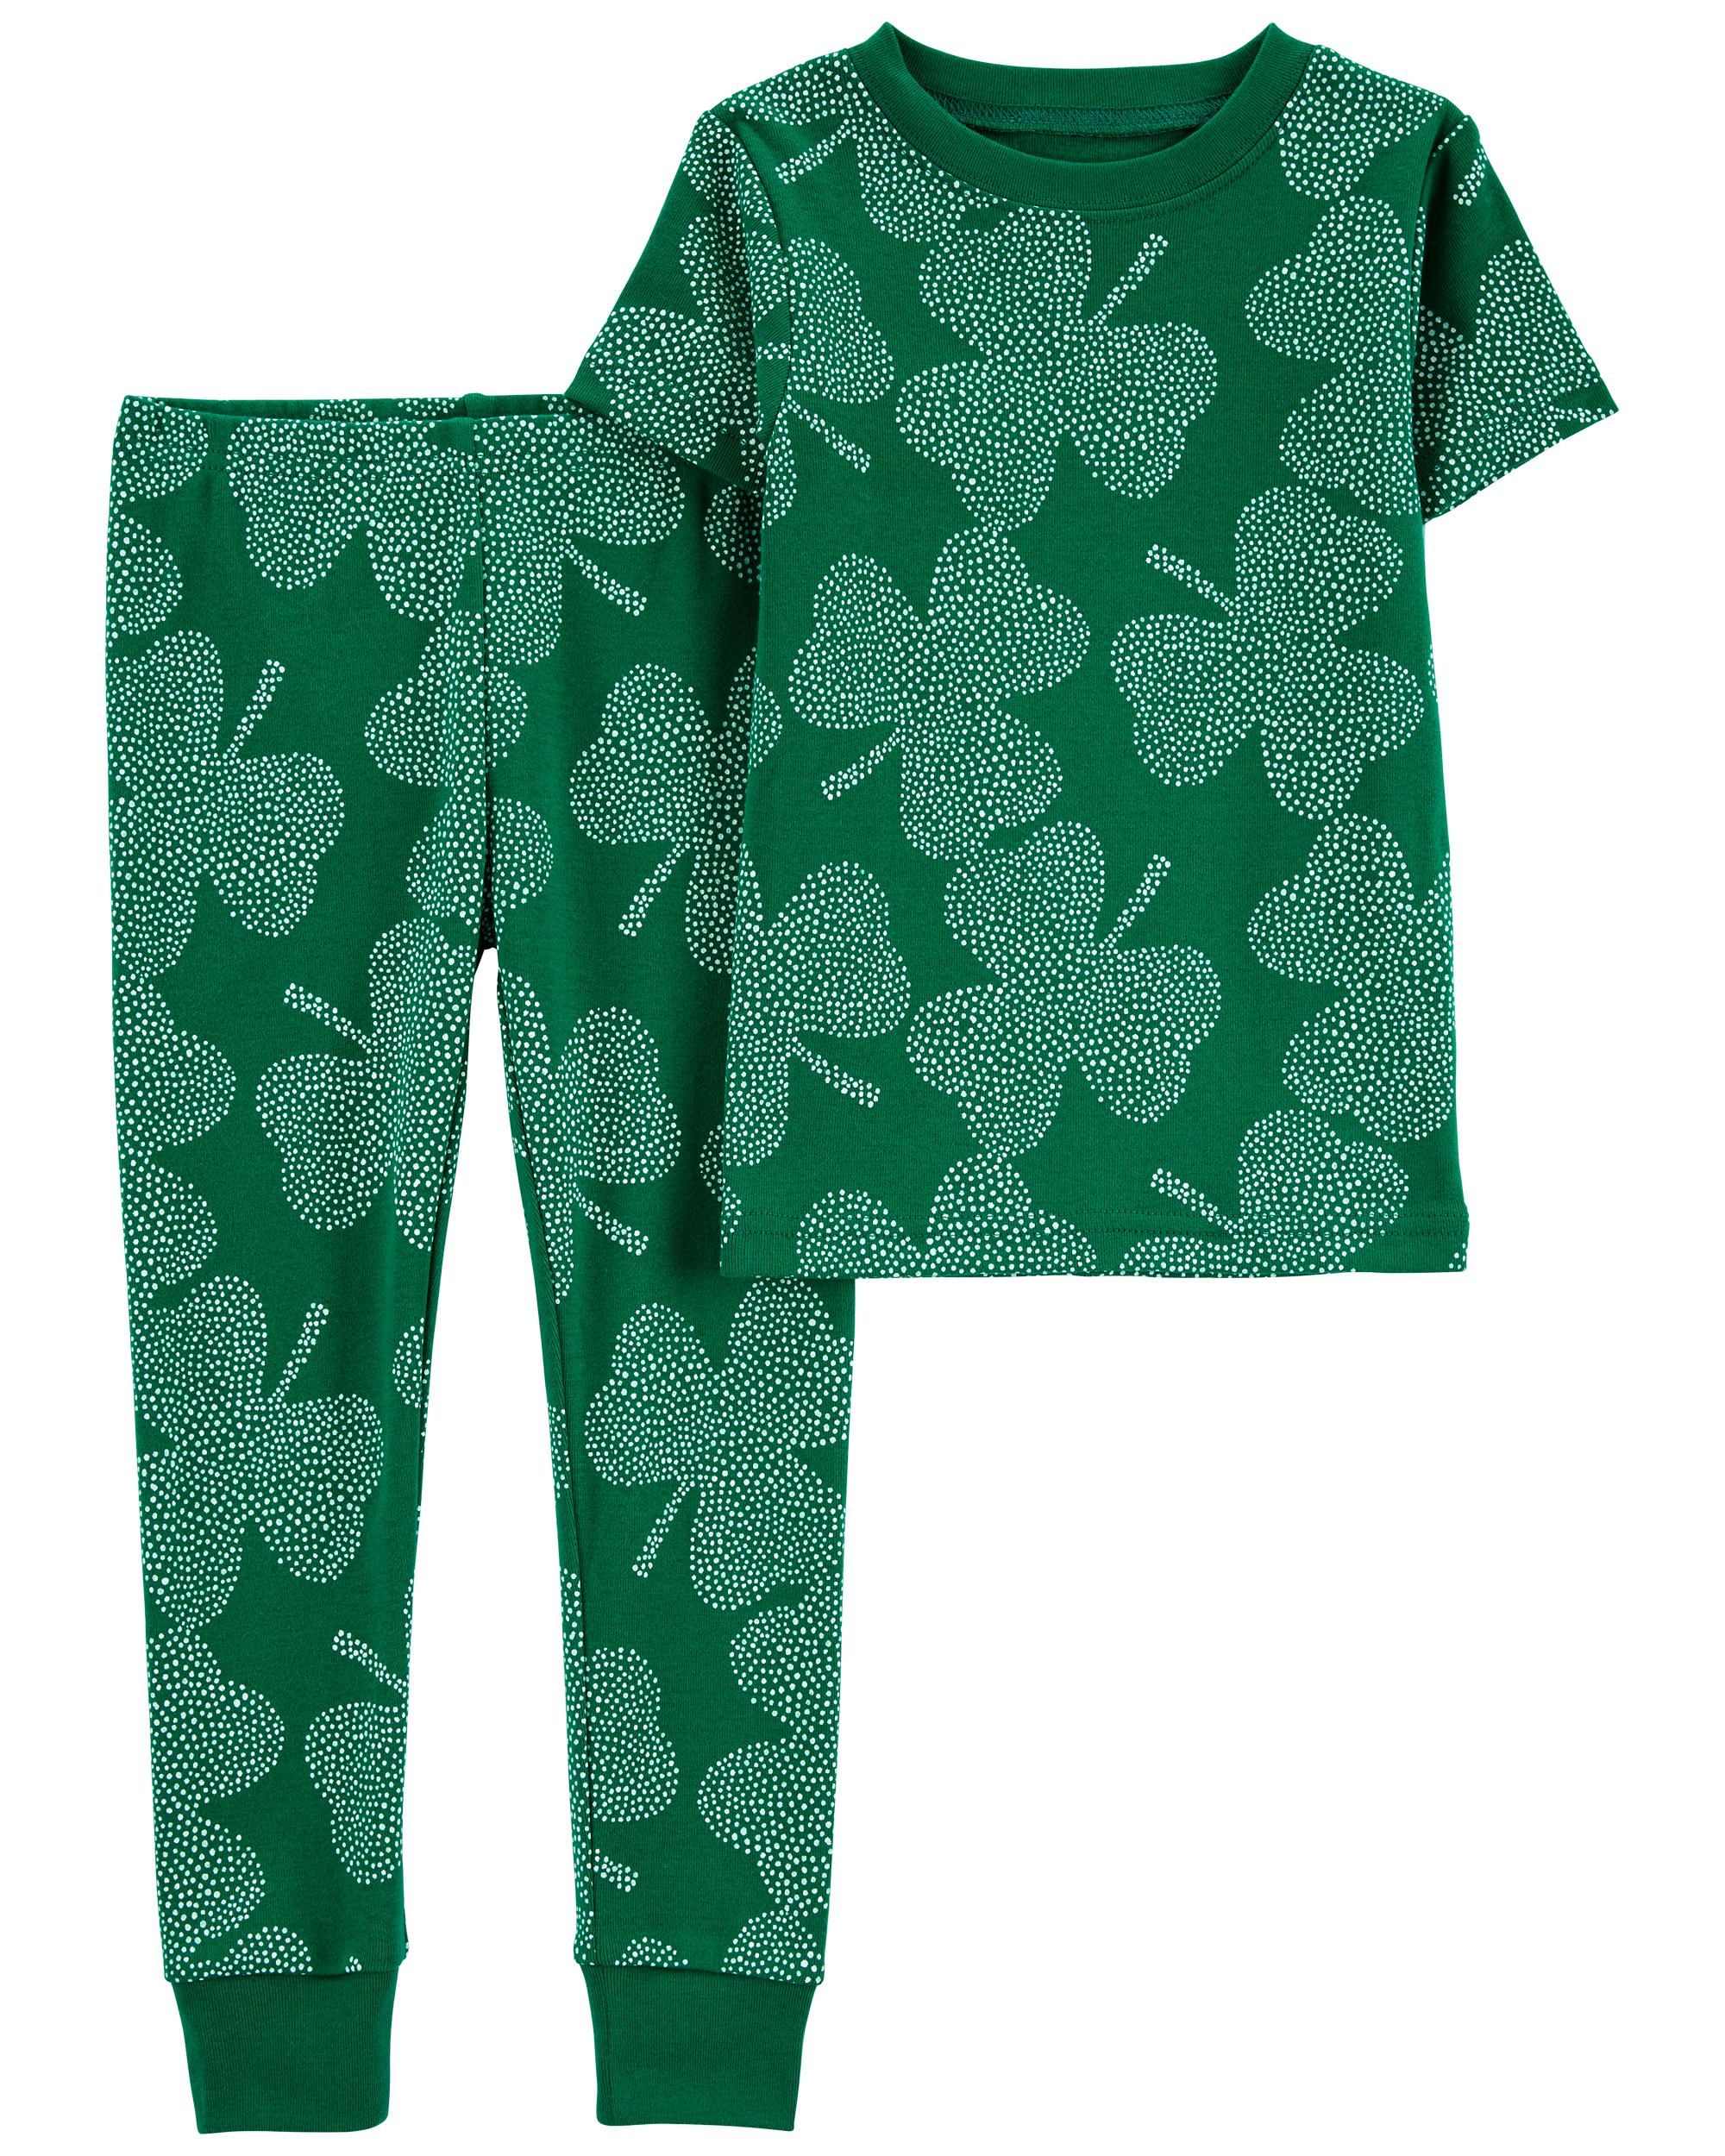 Toddler 2-Piece St. Patrick's Day 100% Snug Fit Cotton PJs | Carter's